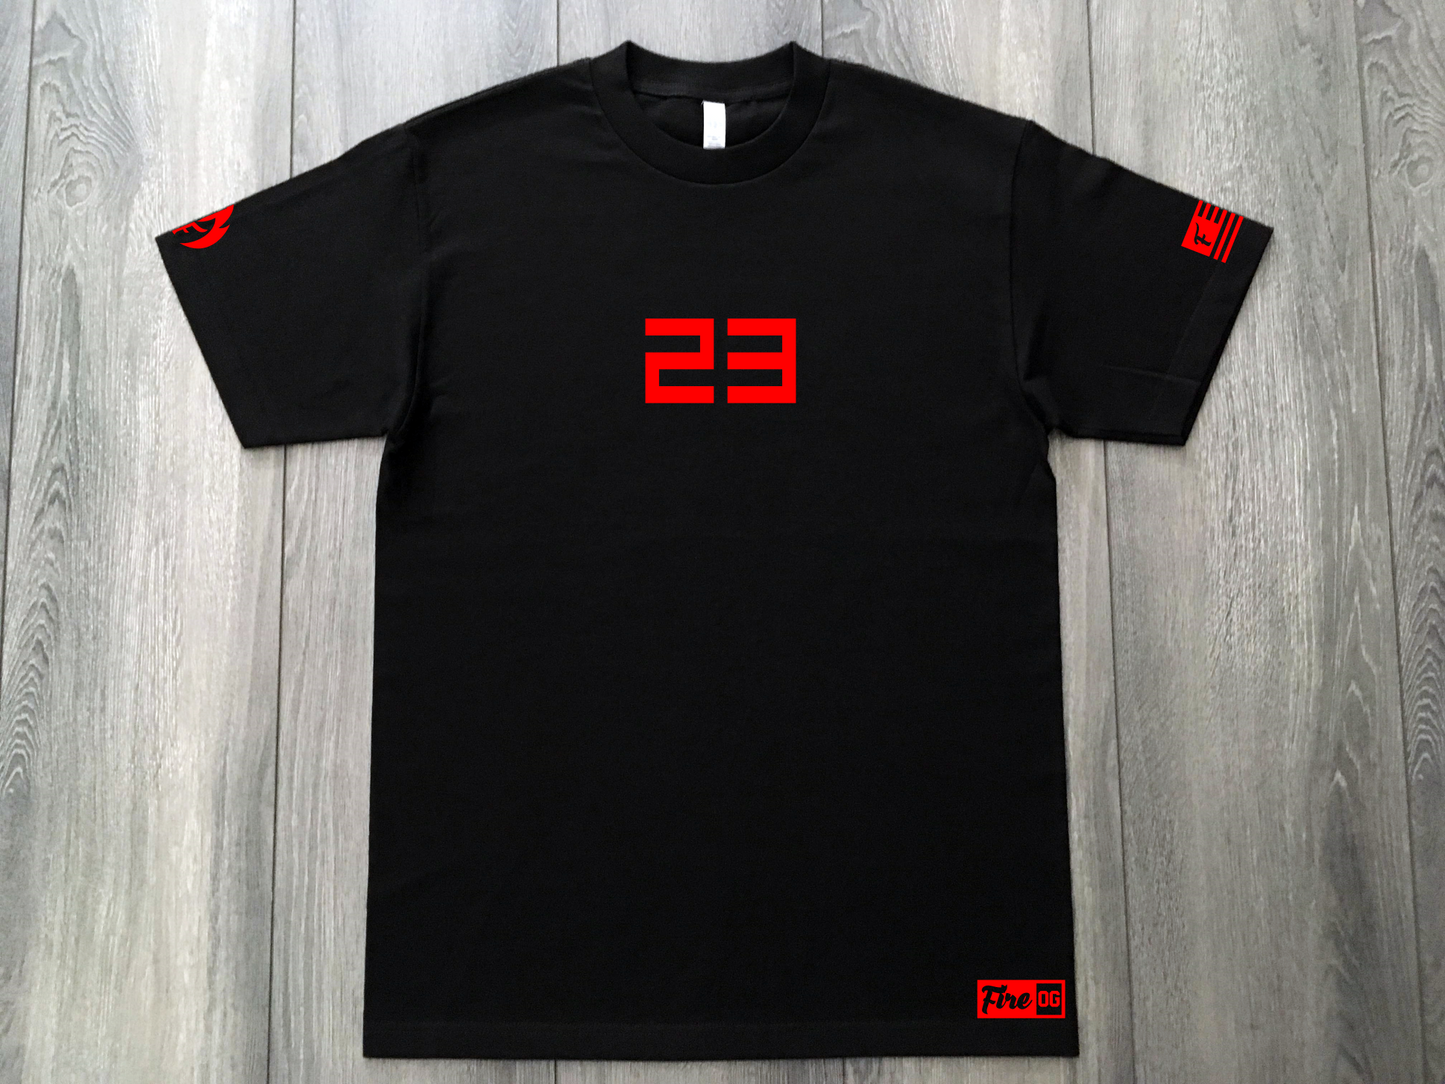 23 Black T-Shirt To Match Air Jordan 13 Retro Breds